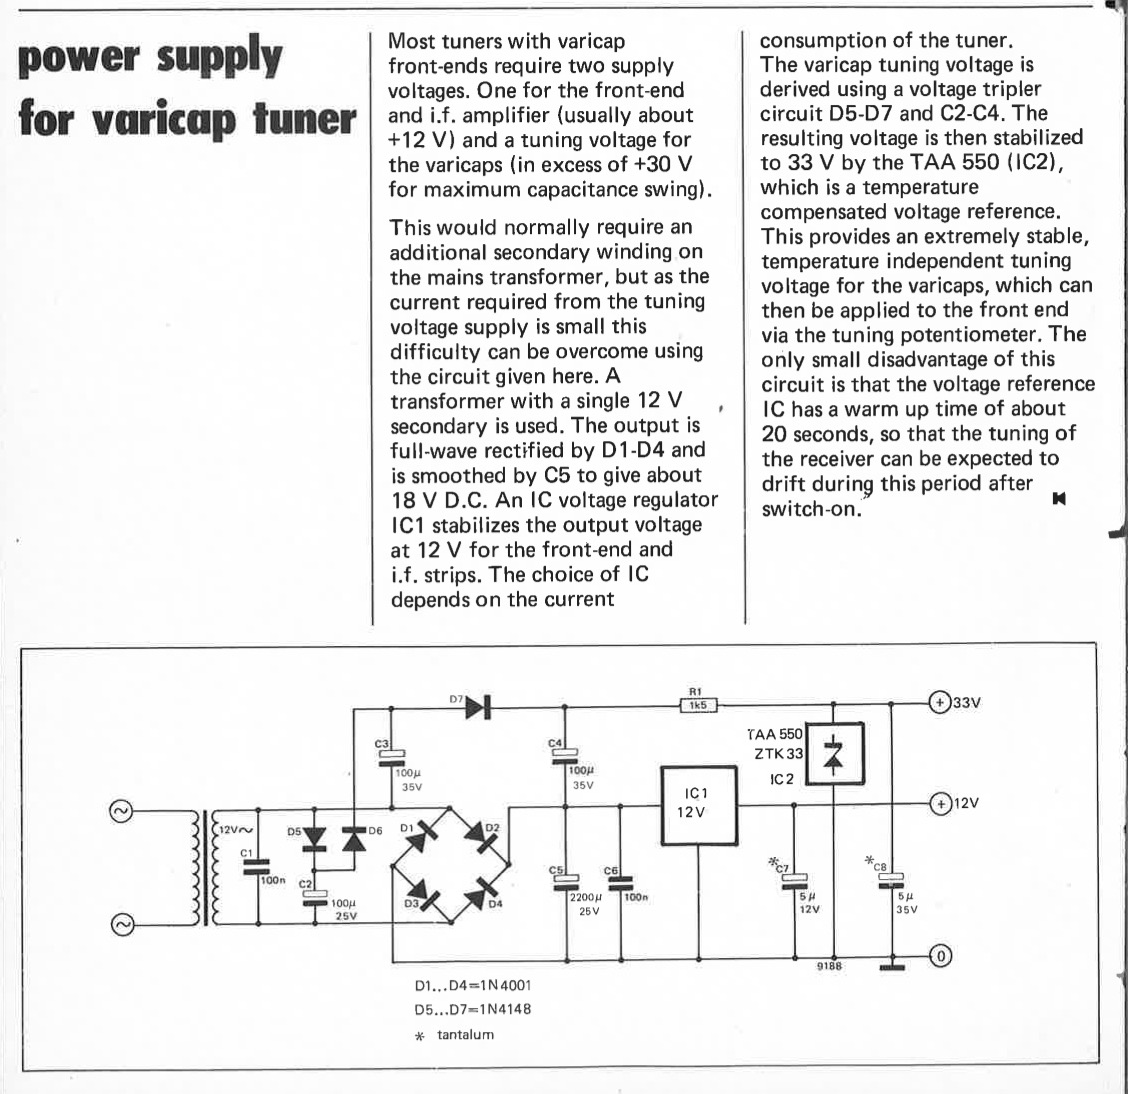 power supply for varicap tuner